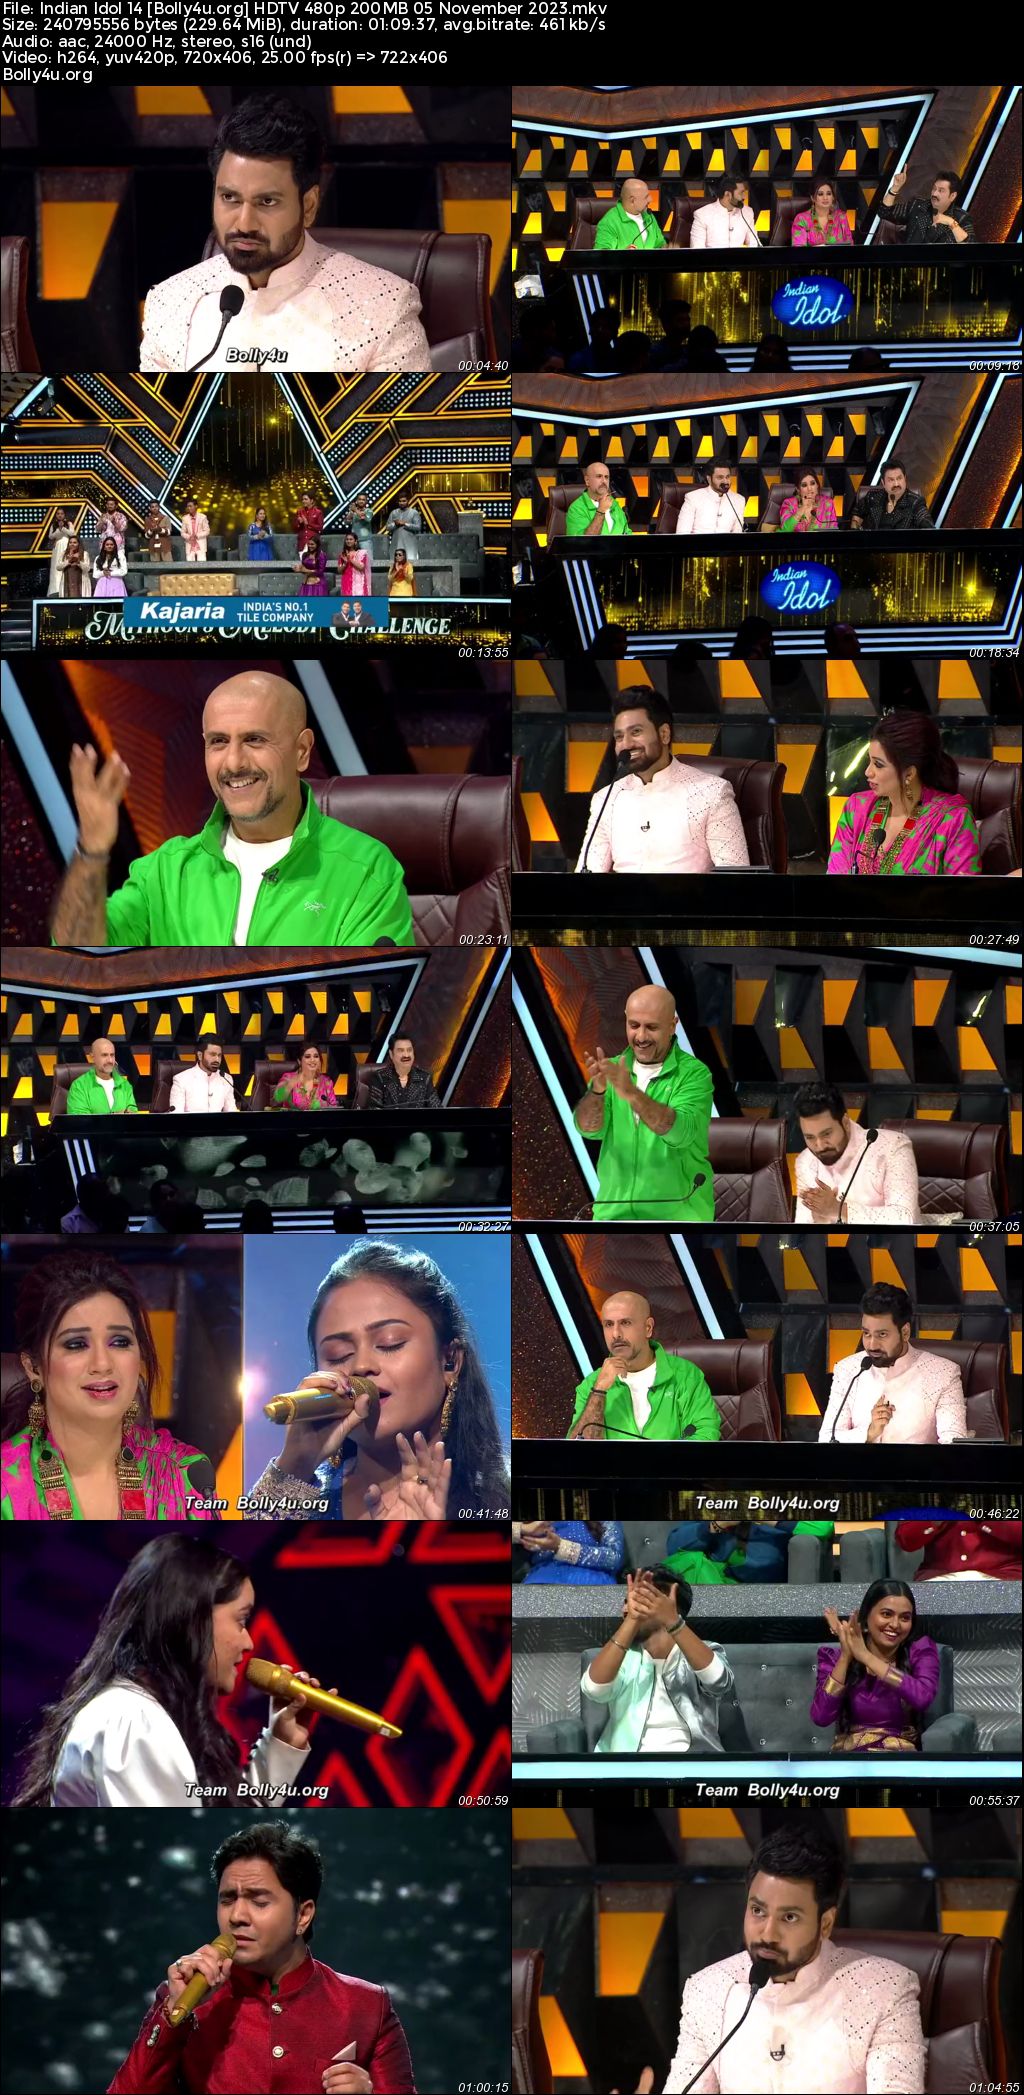 Indian Idol 14 HDTV 480p 200MB 05 November 2023 Download